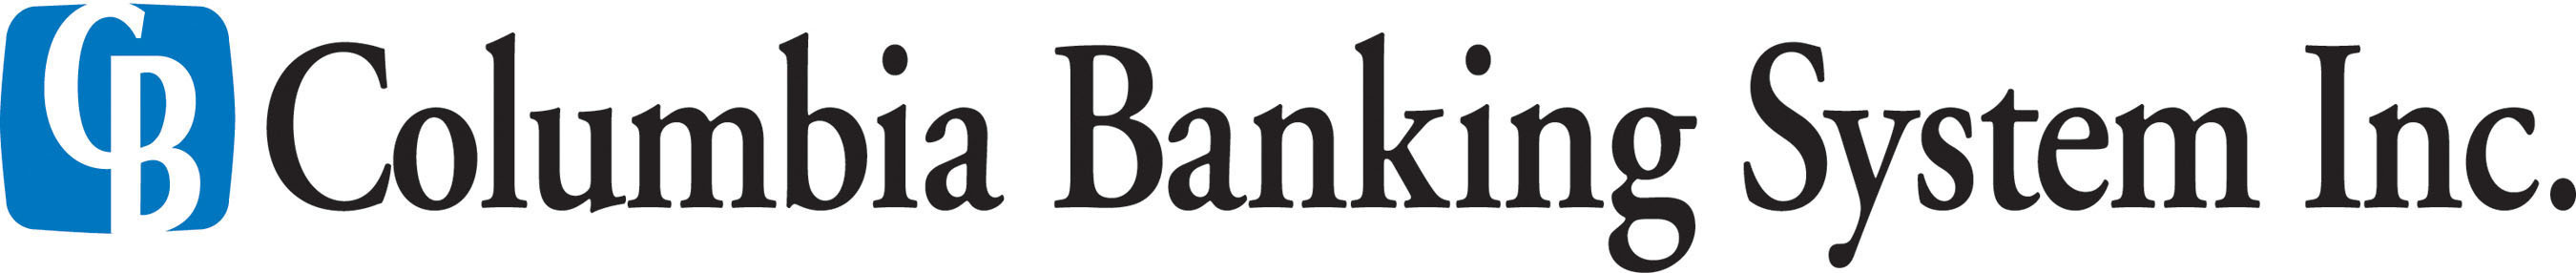 Columbia Banking System Logo. (PRNewsFoto/Columbia Banking System, Inc.) (PRNewsFoto/)